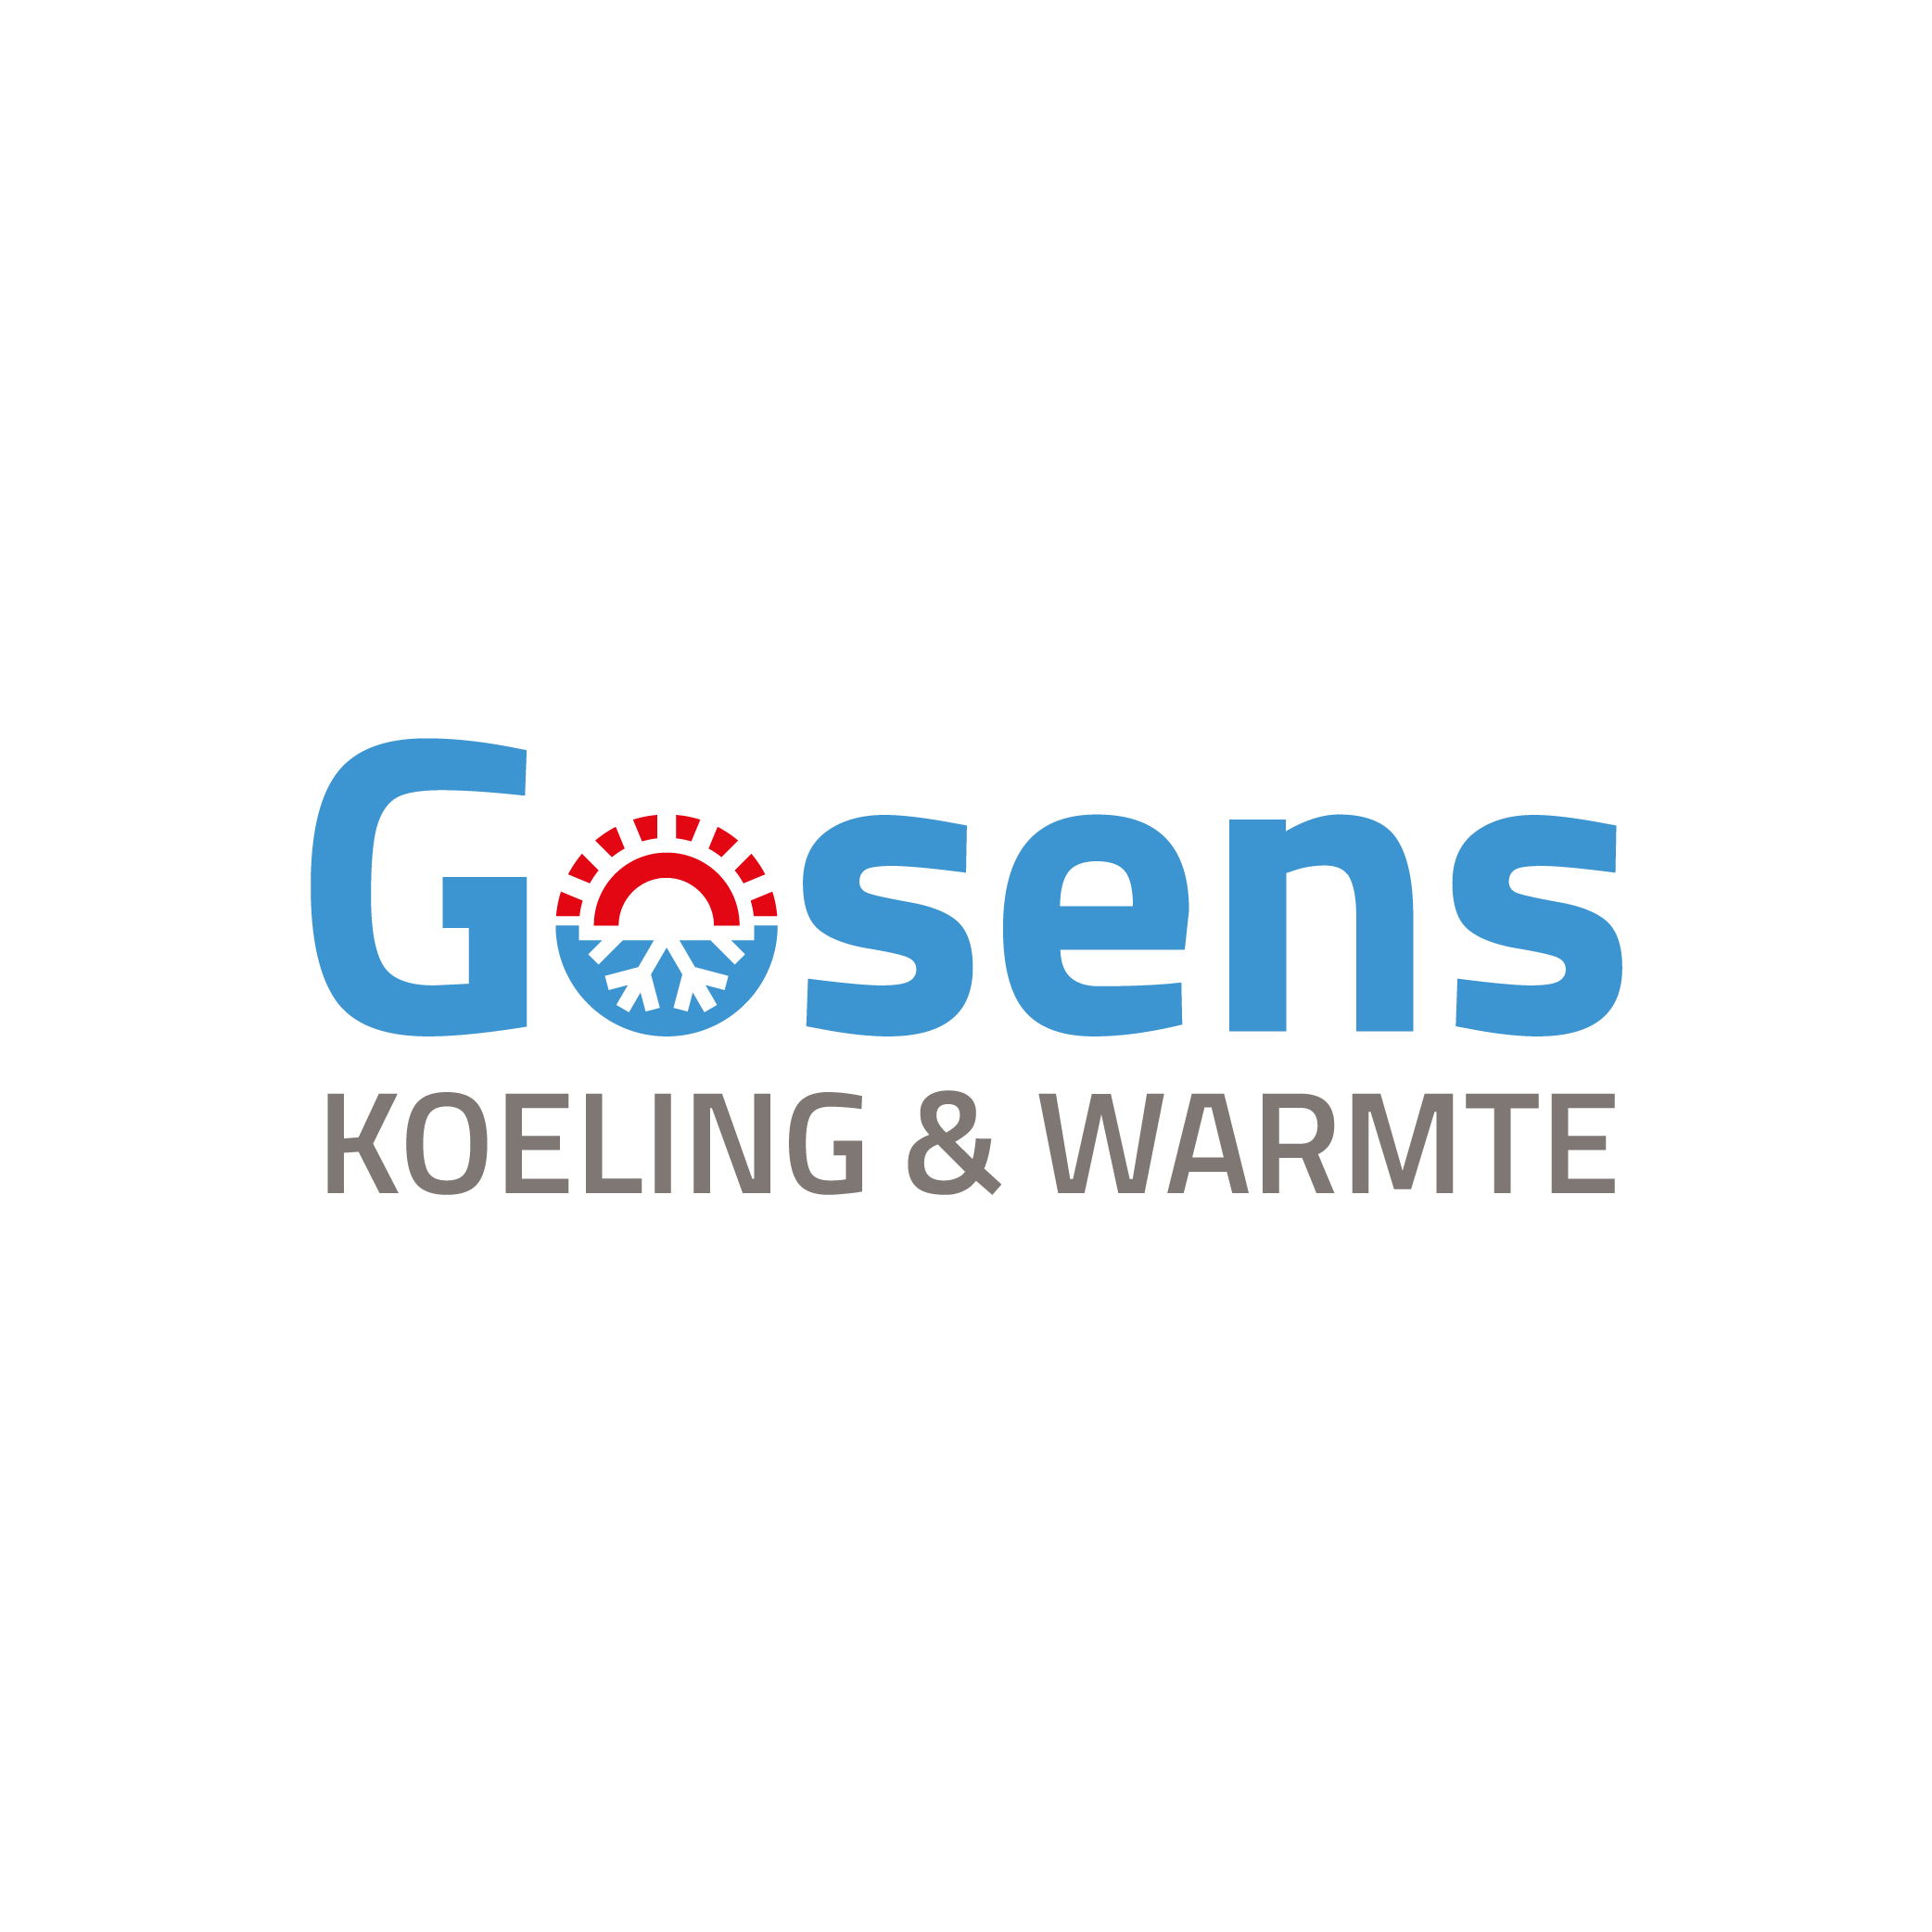 Gosens Koeling & Warmte